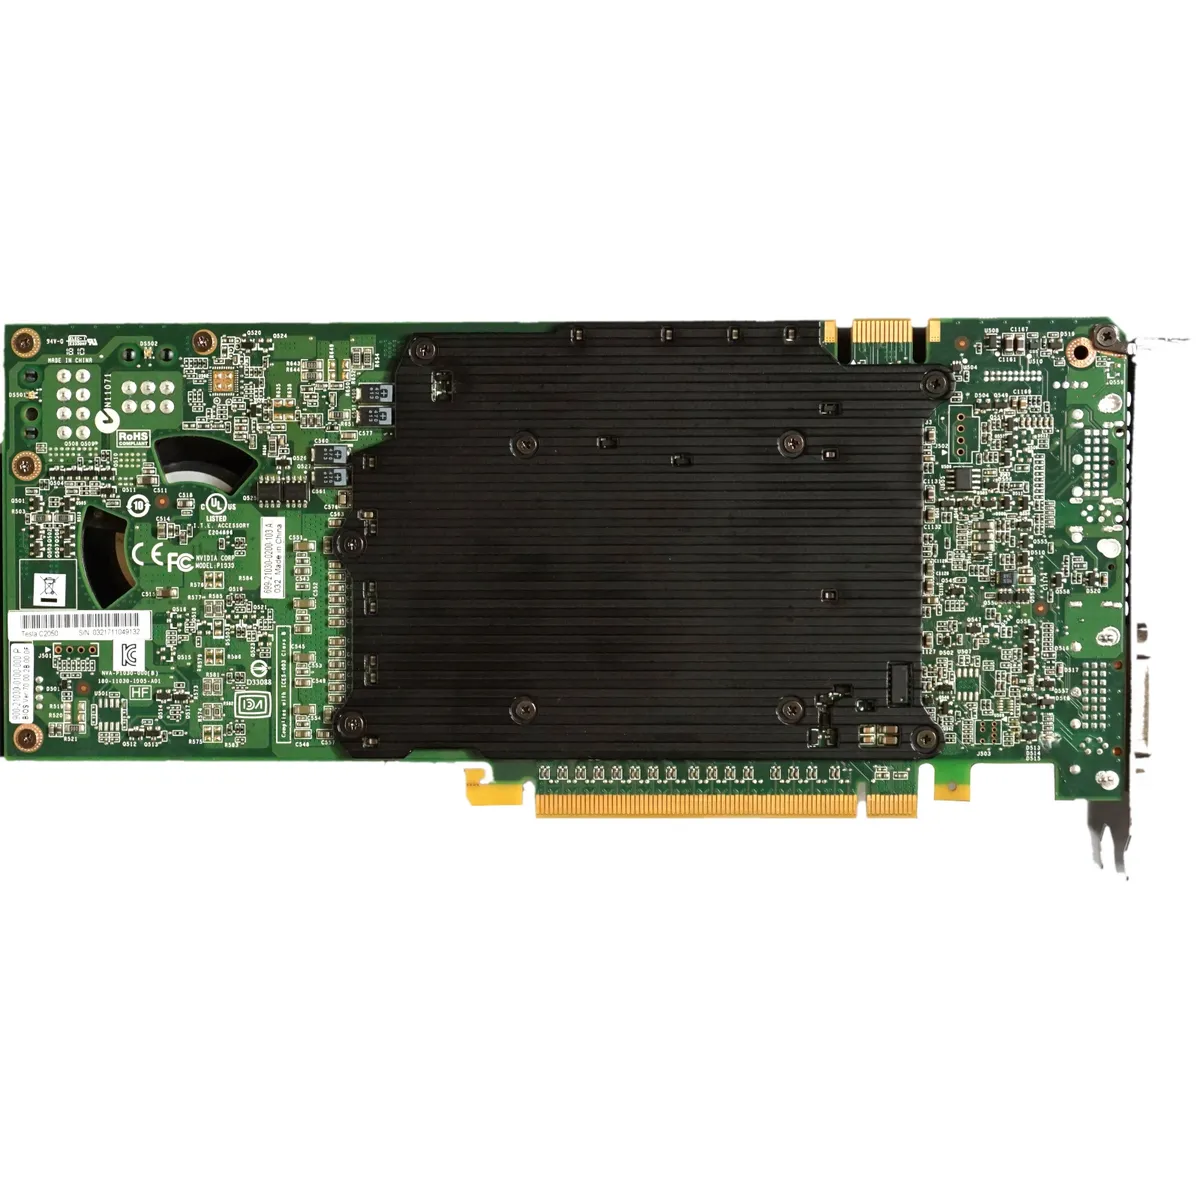 nVidia Tesla C2050 - 3GB GDDR5 PCIe-x16 FH Computing Processor